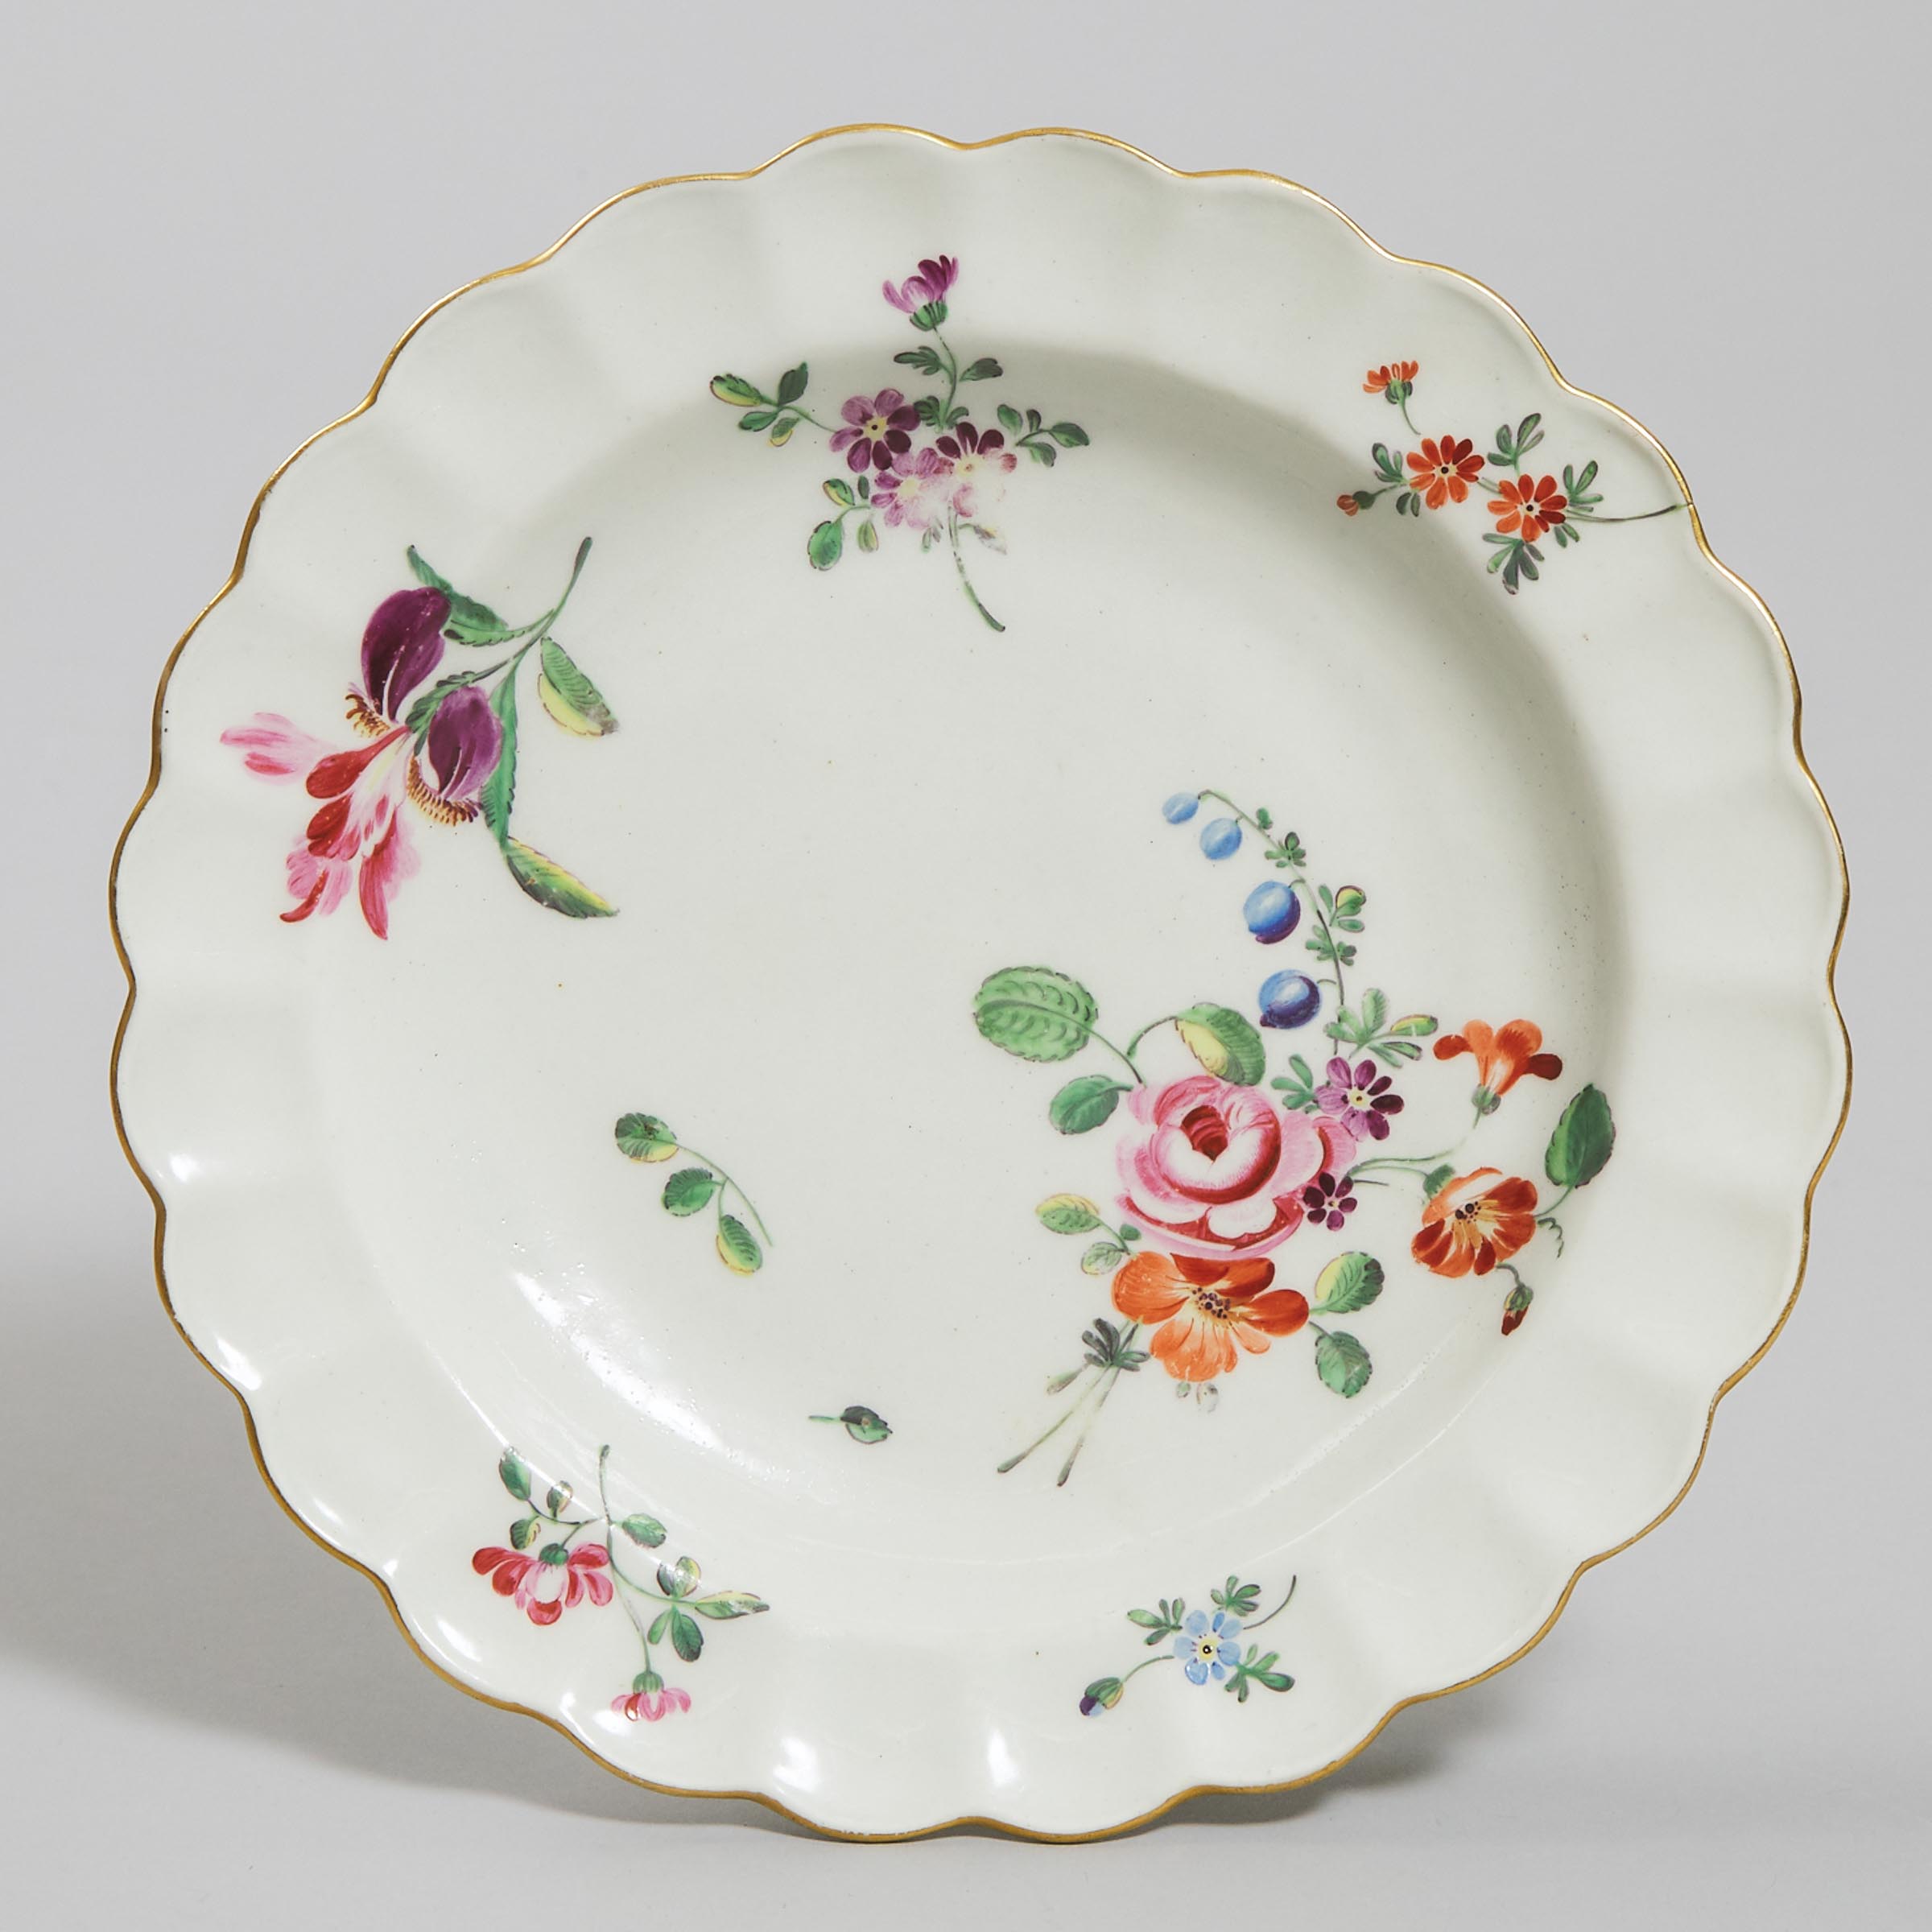 Worcester Flower Painted Plate, workshop of James Giles, c.1770-75